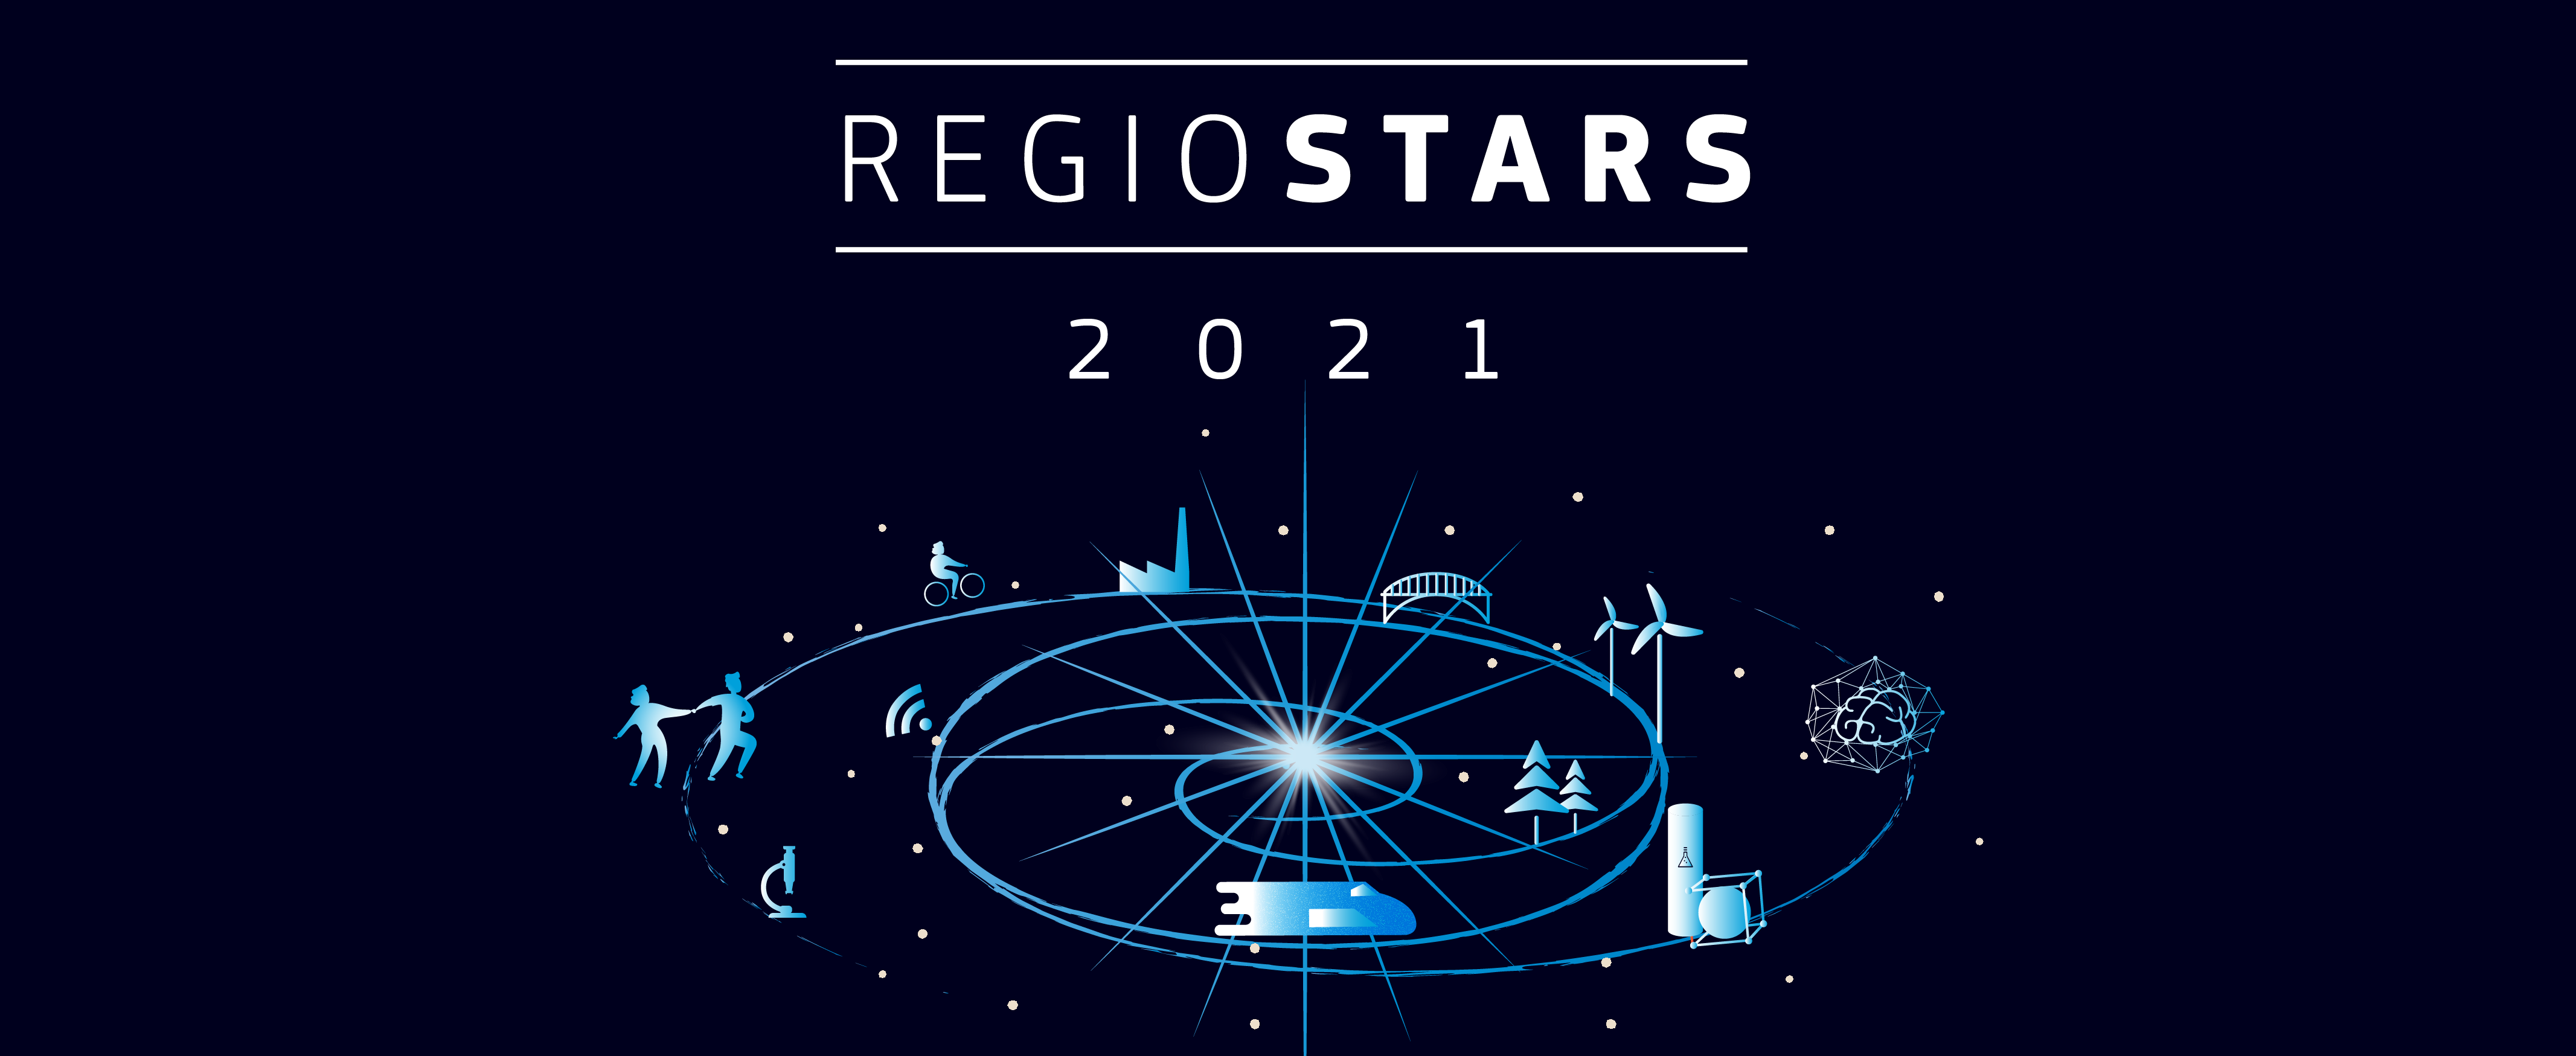 Lancement du concours Regiostars 2021